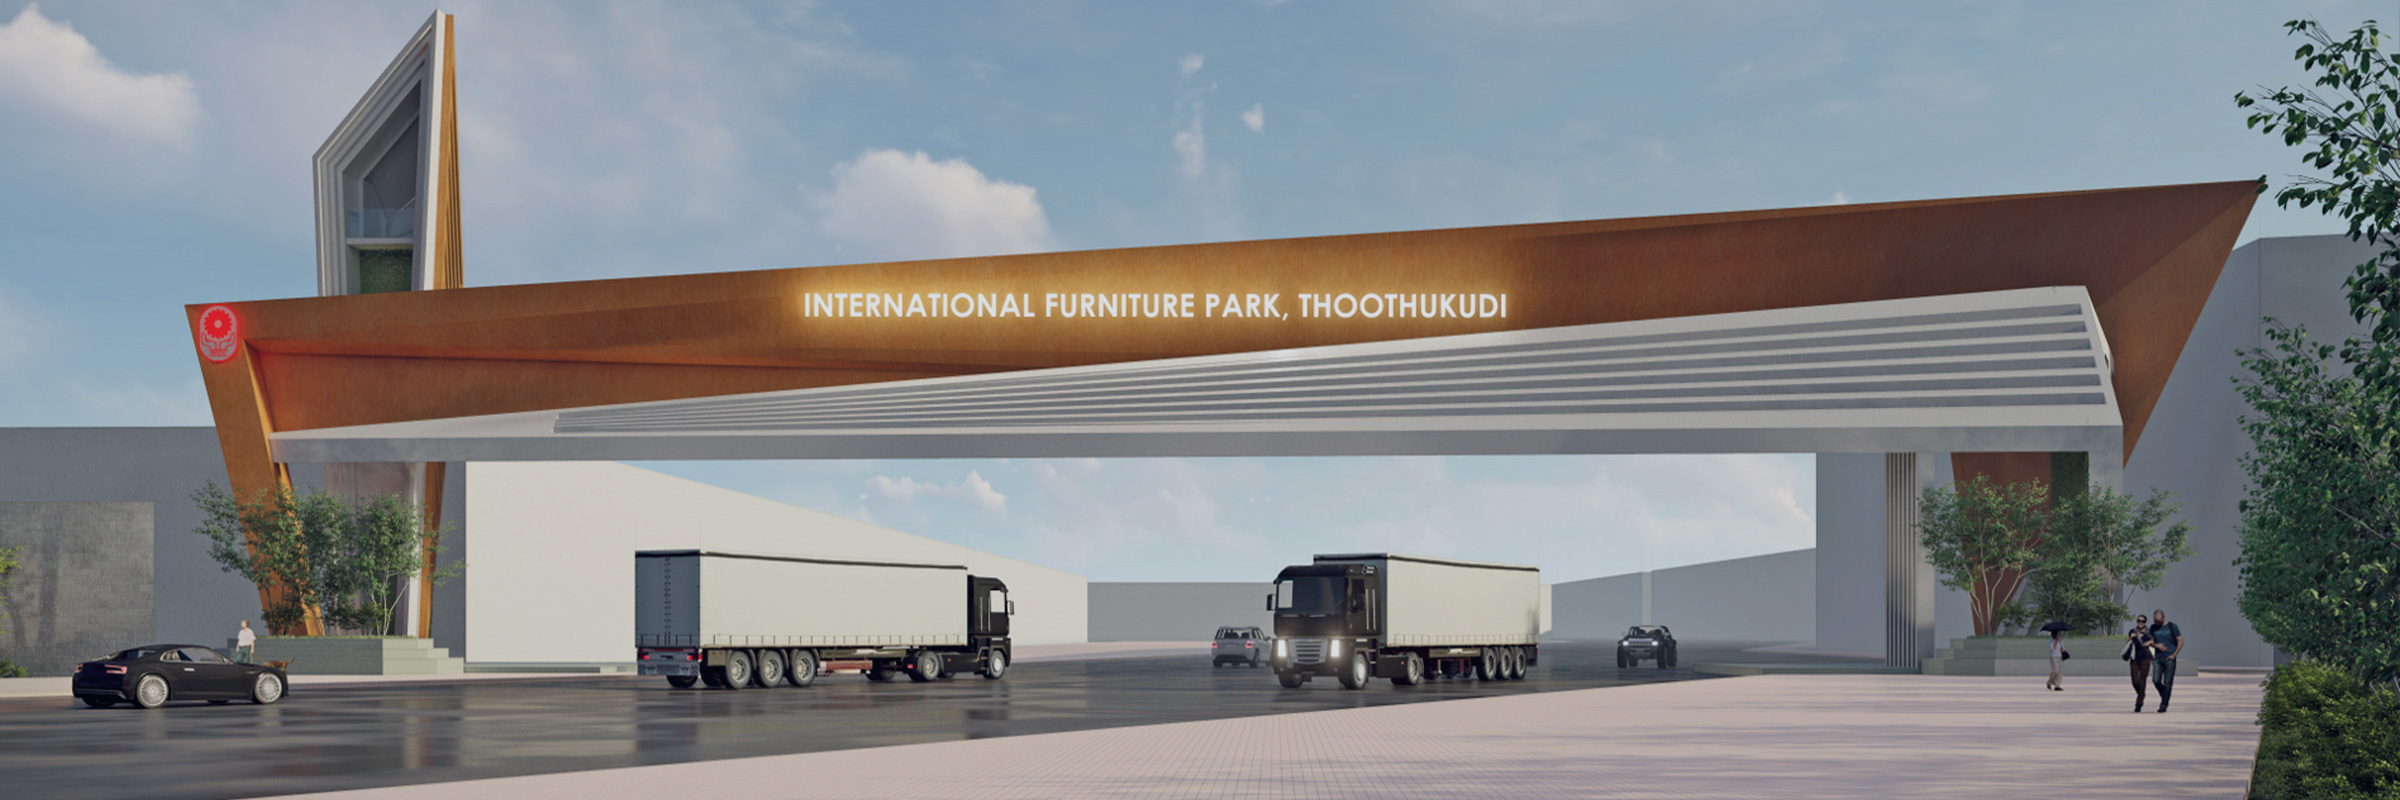 Thoothukudi International Furniture Park, India